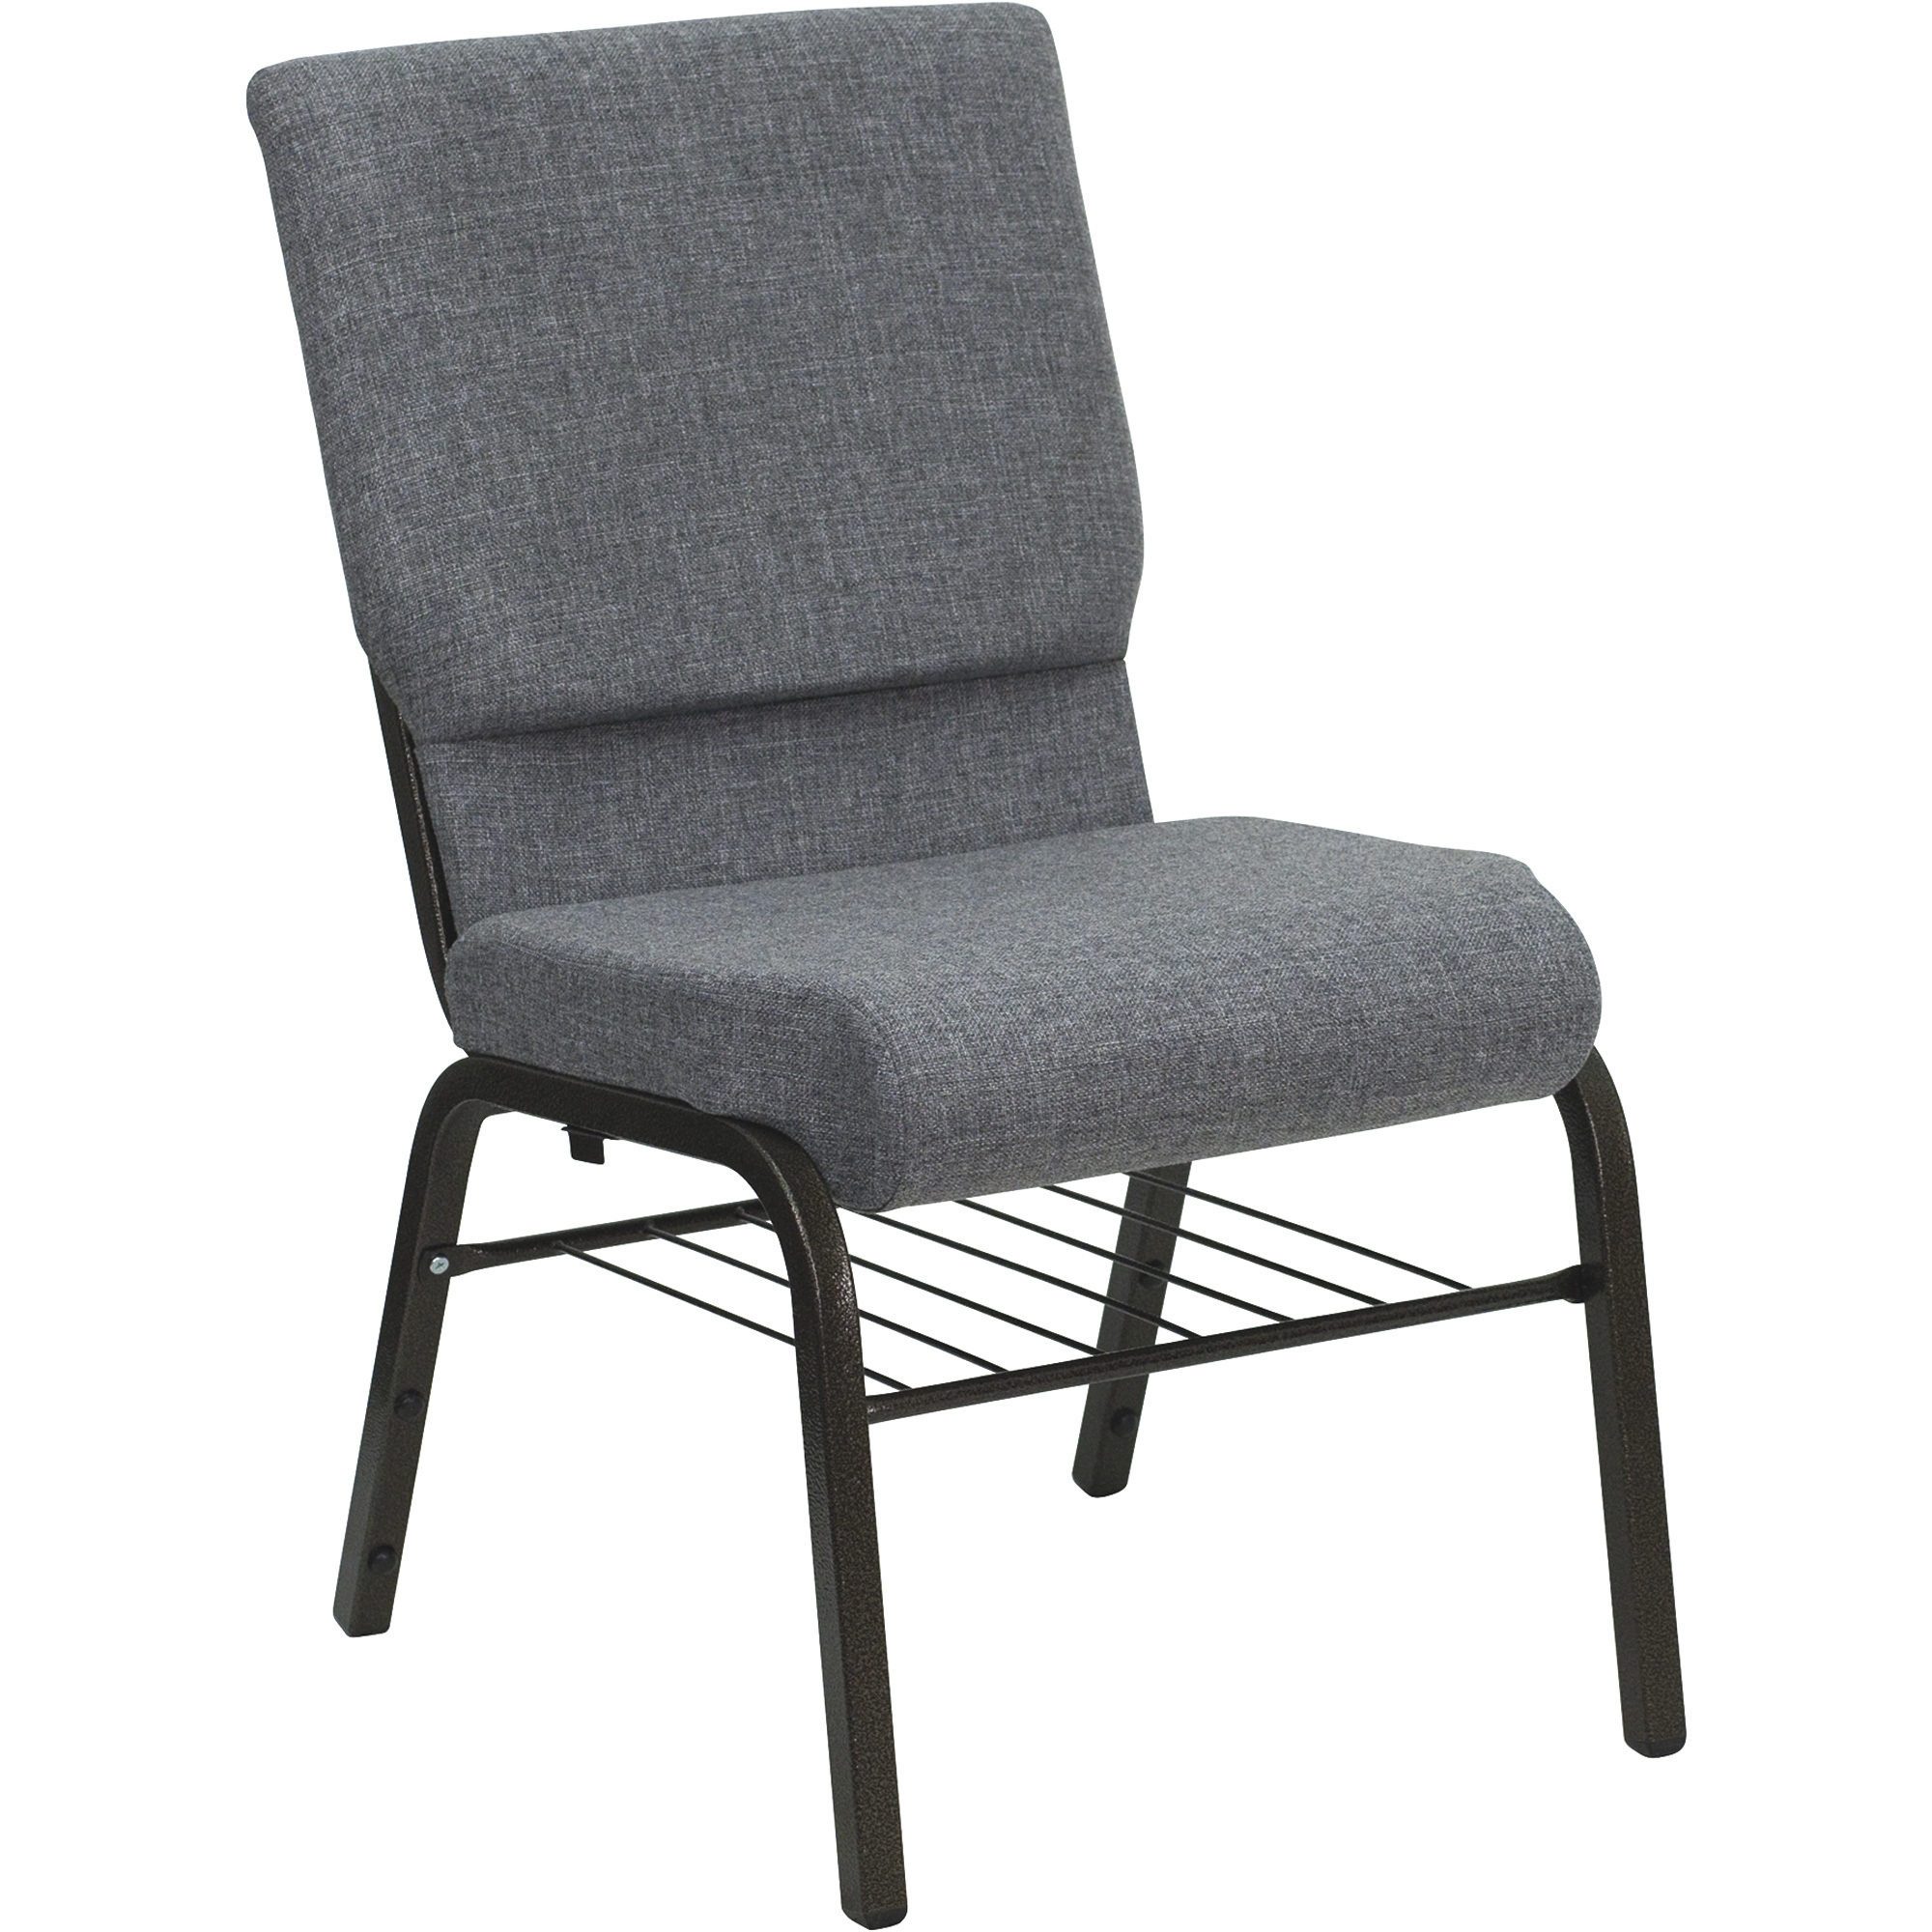 Flash Furniture Fabric Upholstered Church Chair â Gray/Gold Vein Frame, 800-Lb. Capacity, Model XUCH60096BEIJGB